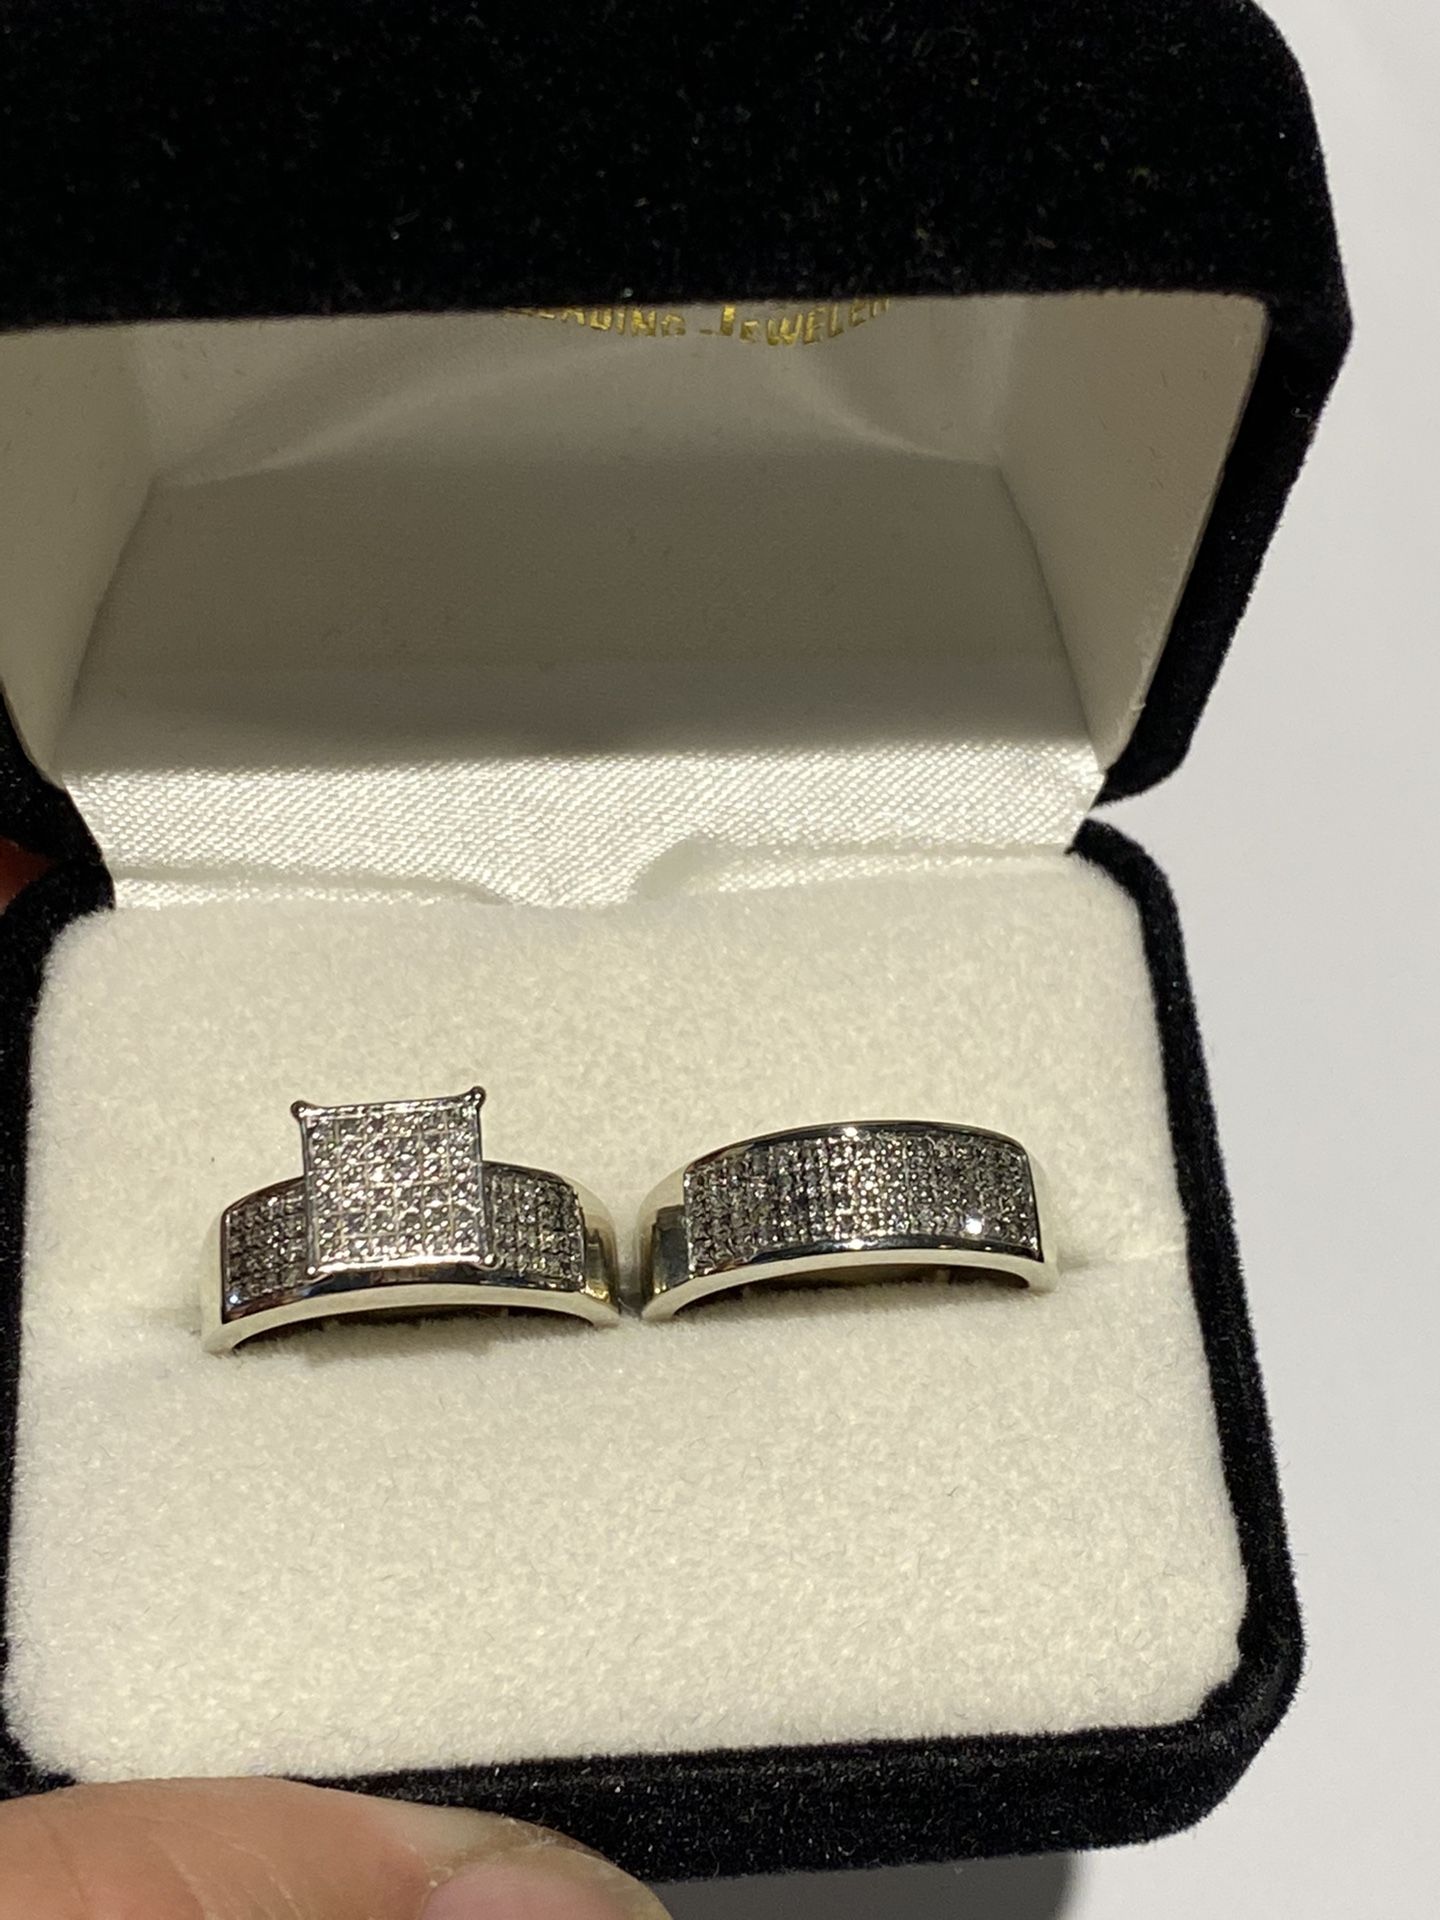 2-pc Set 10k White Gold Rings with Diamonds Beautiful!